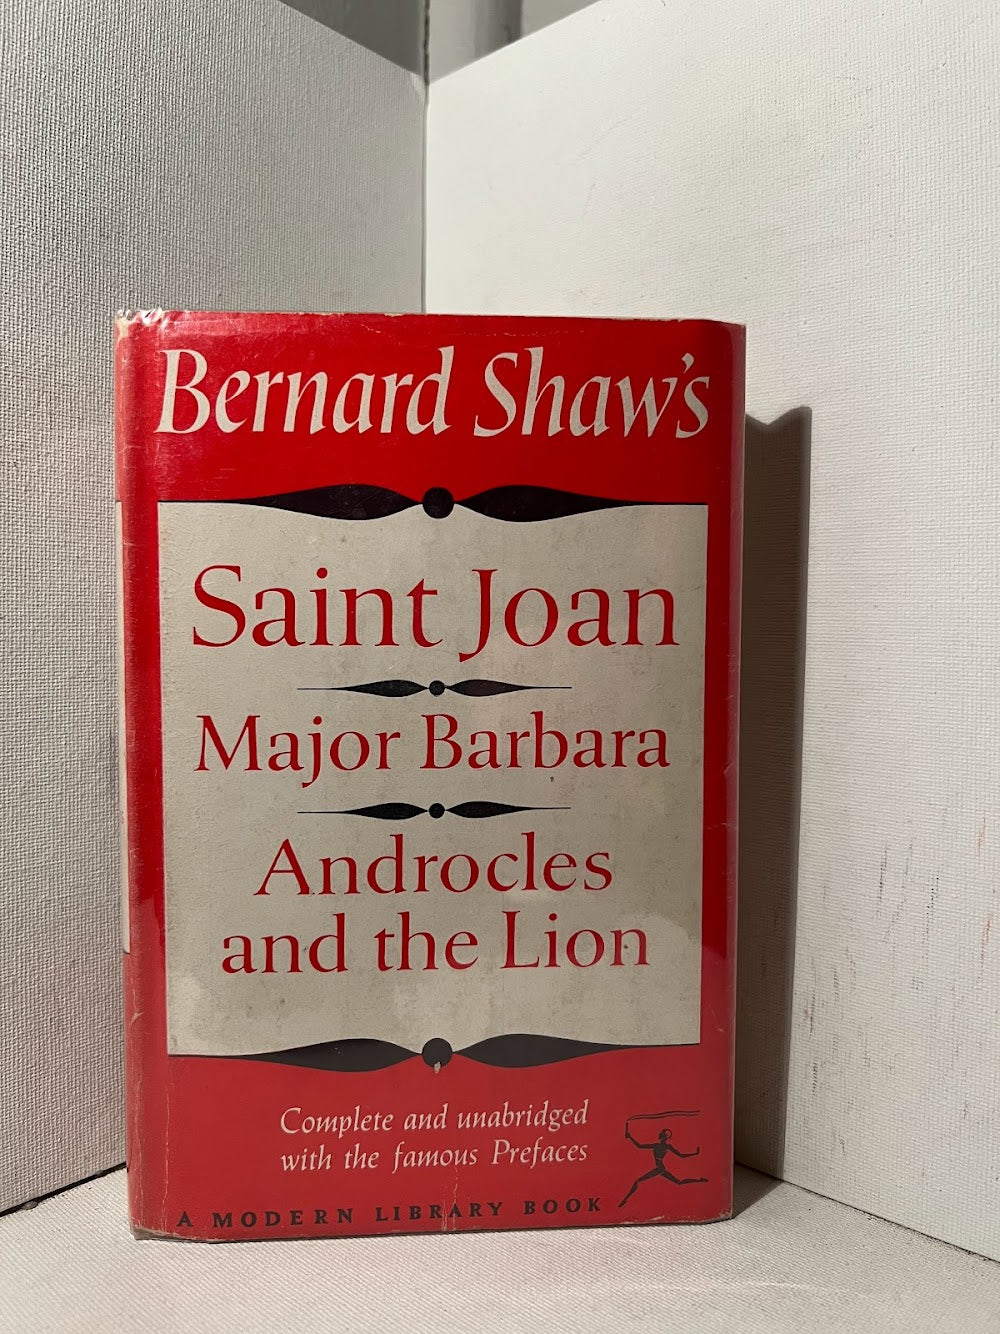 Saint Joan-Major Barbara-Androcles and the Lion by Bernard Shaw